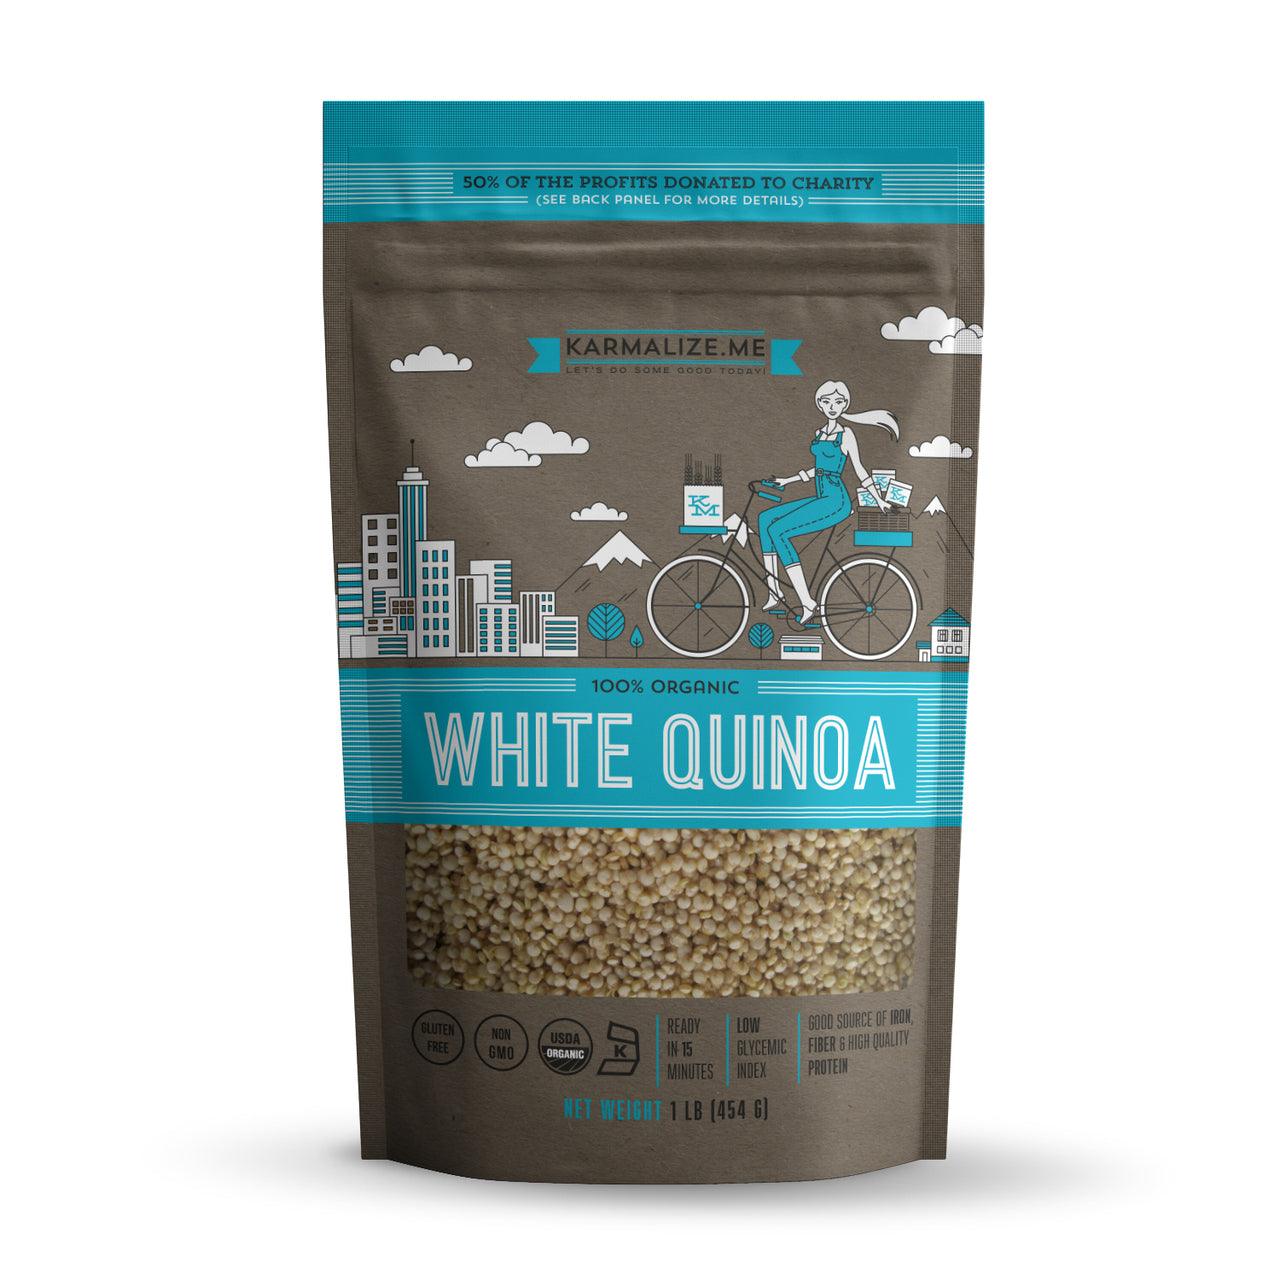 100% Organic White Quinoa.